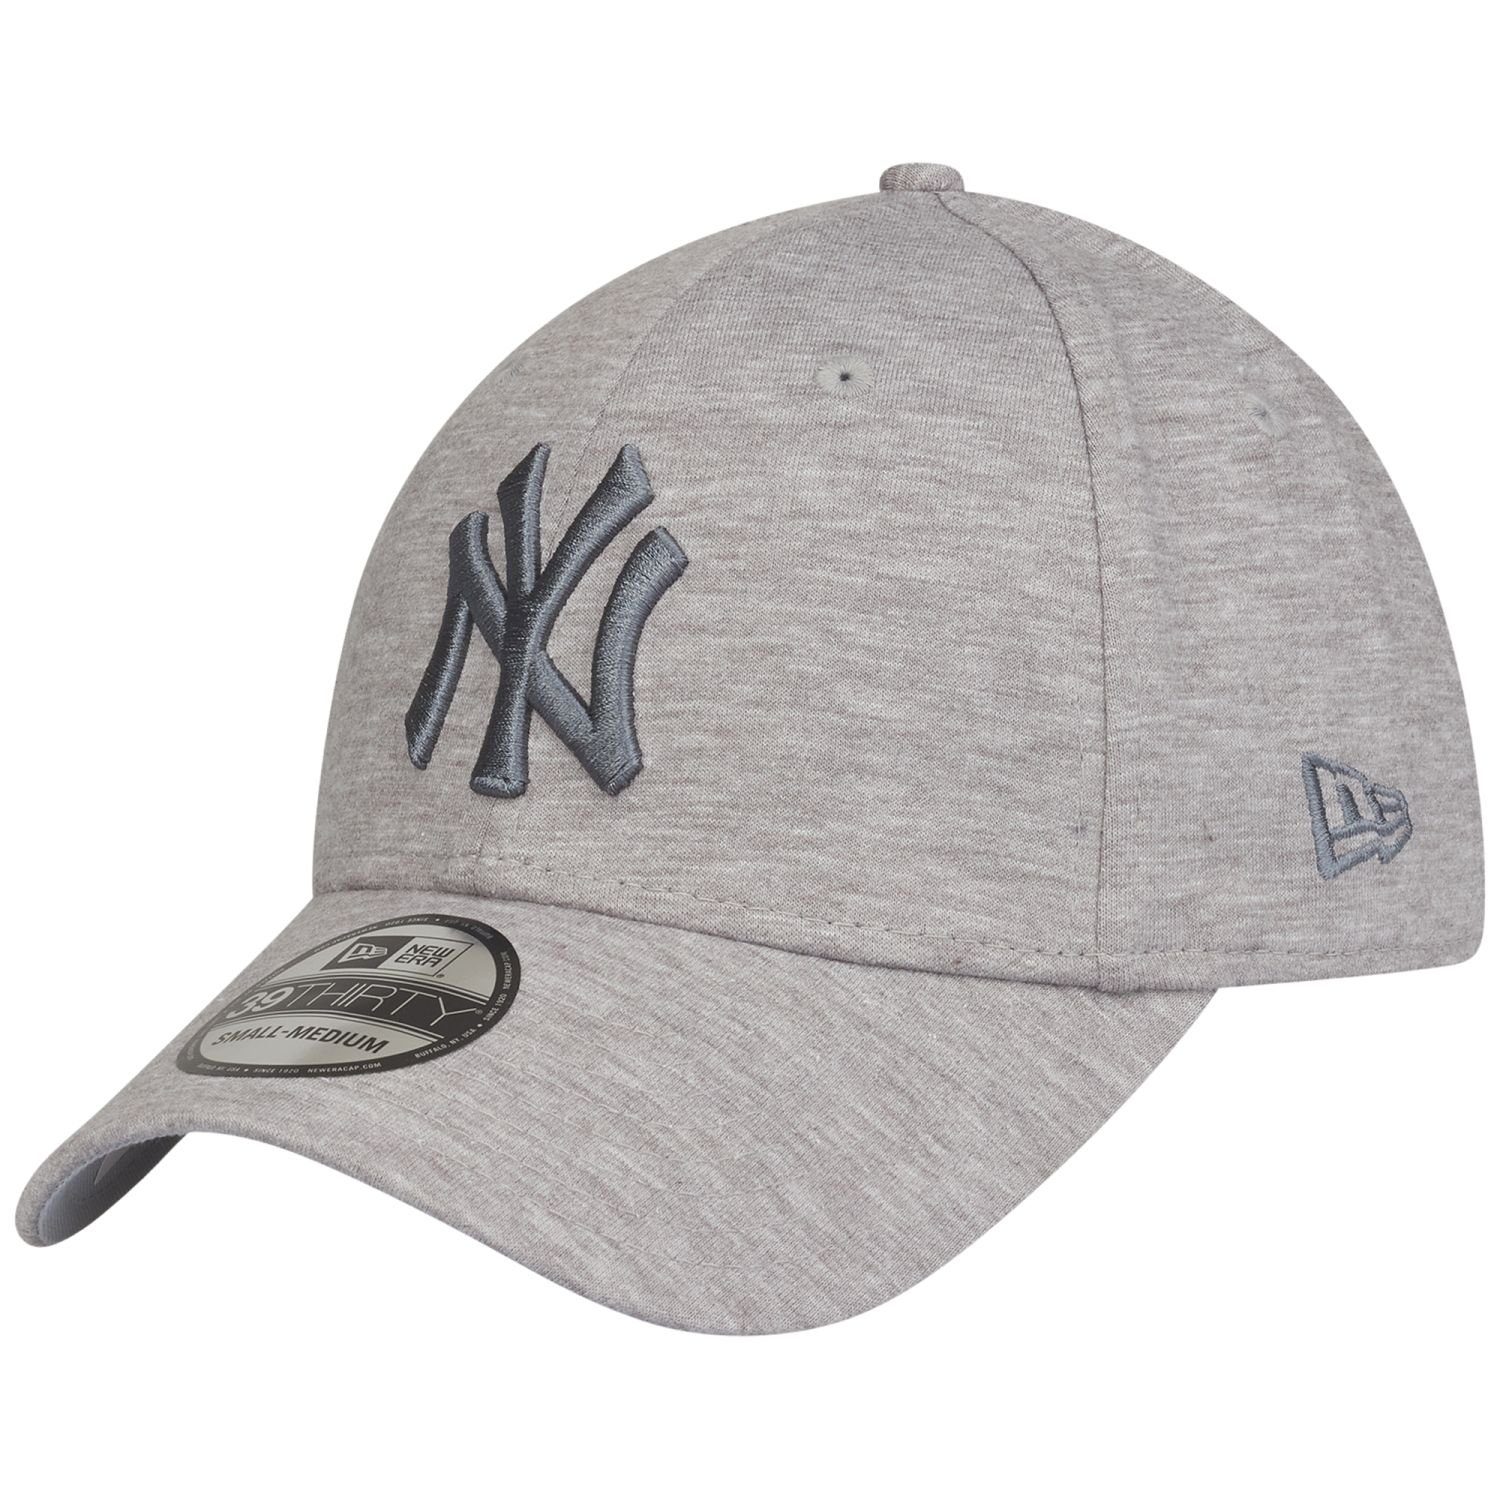 New Yankees JERSEY 39Thirty New York Stretch Cap Era Flex